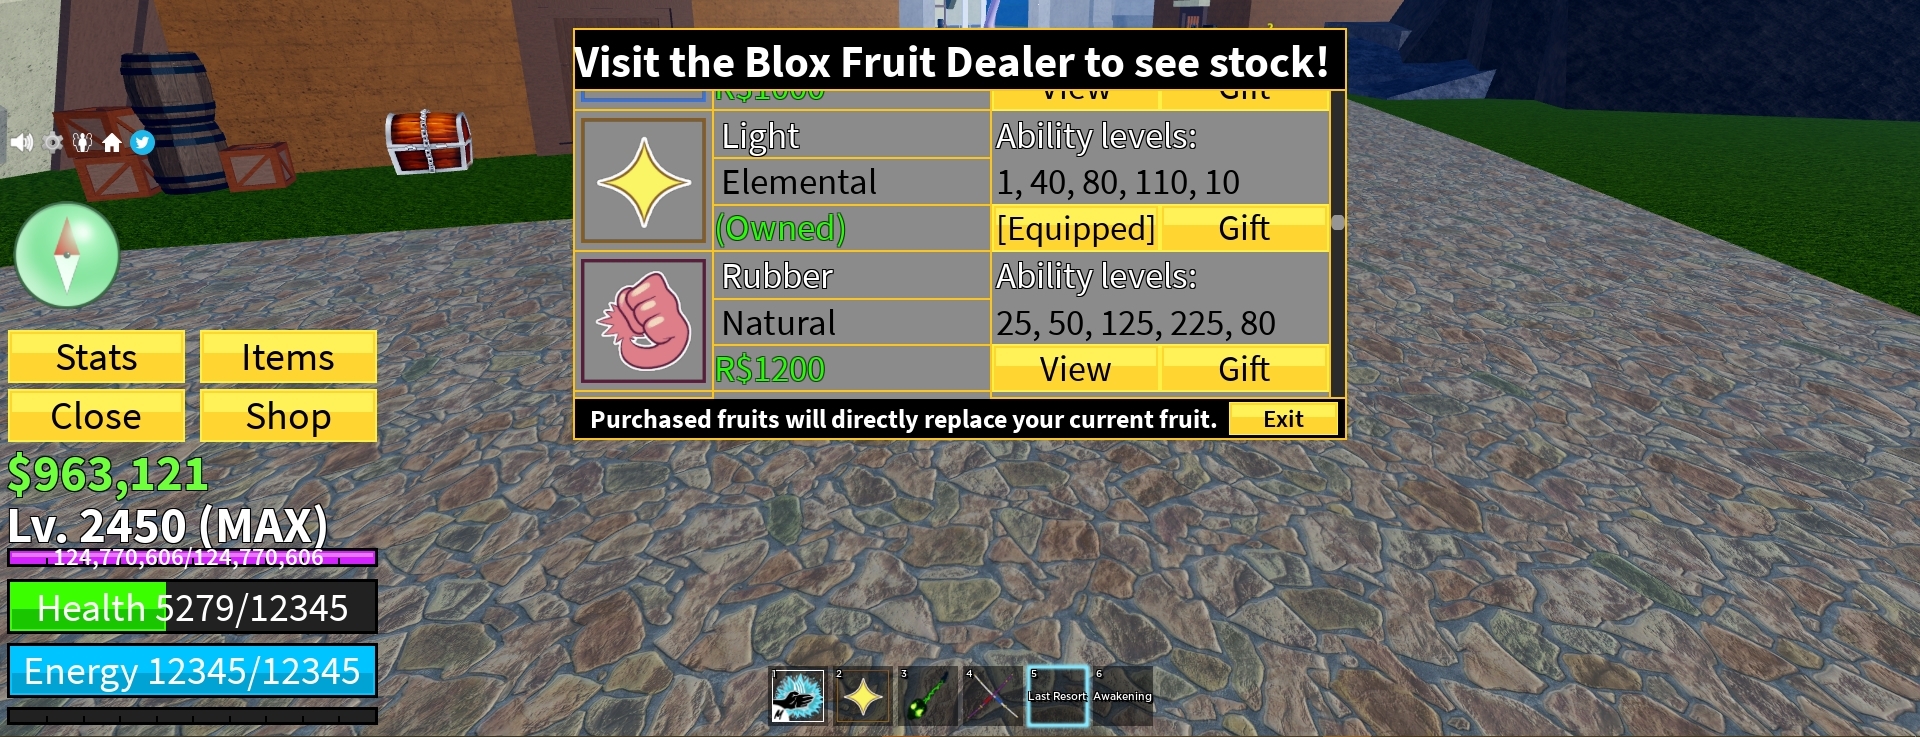 Blox Fruit Account Lv:2450Max  Full Gear Awaken Cyborg Race V4